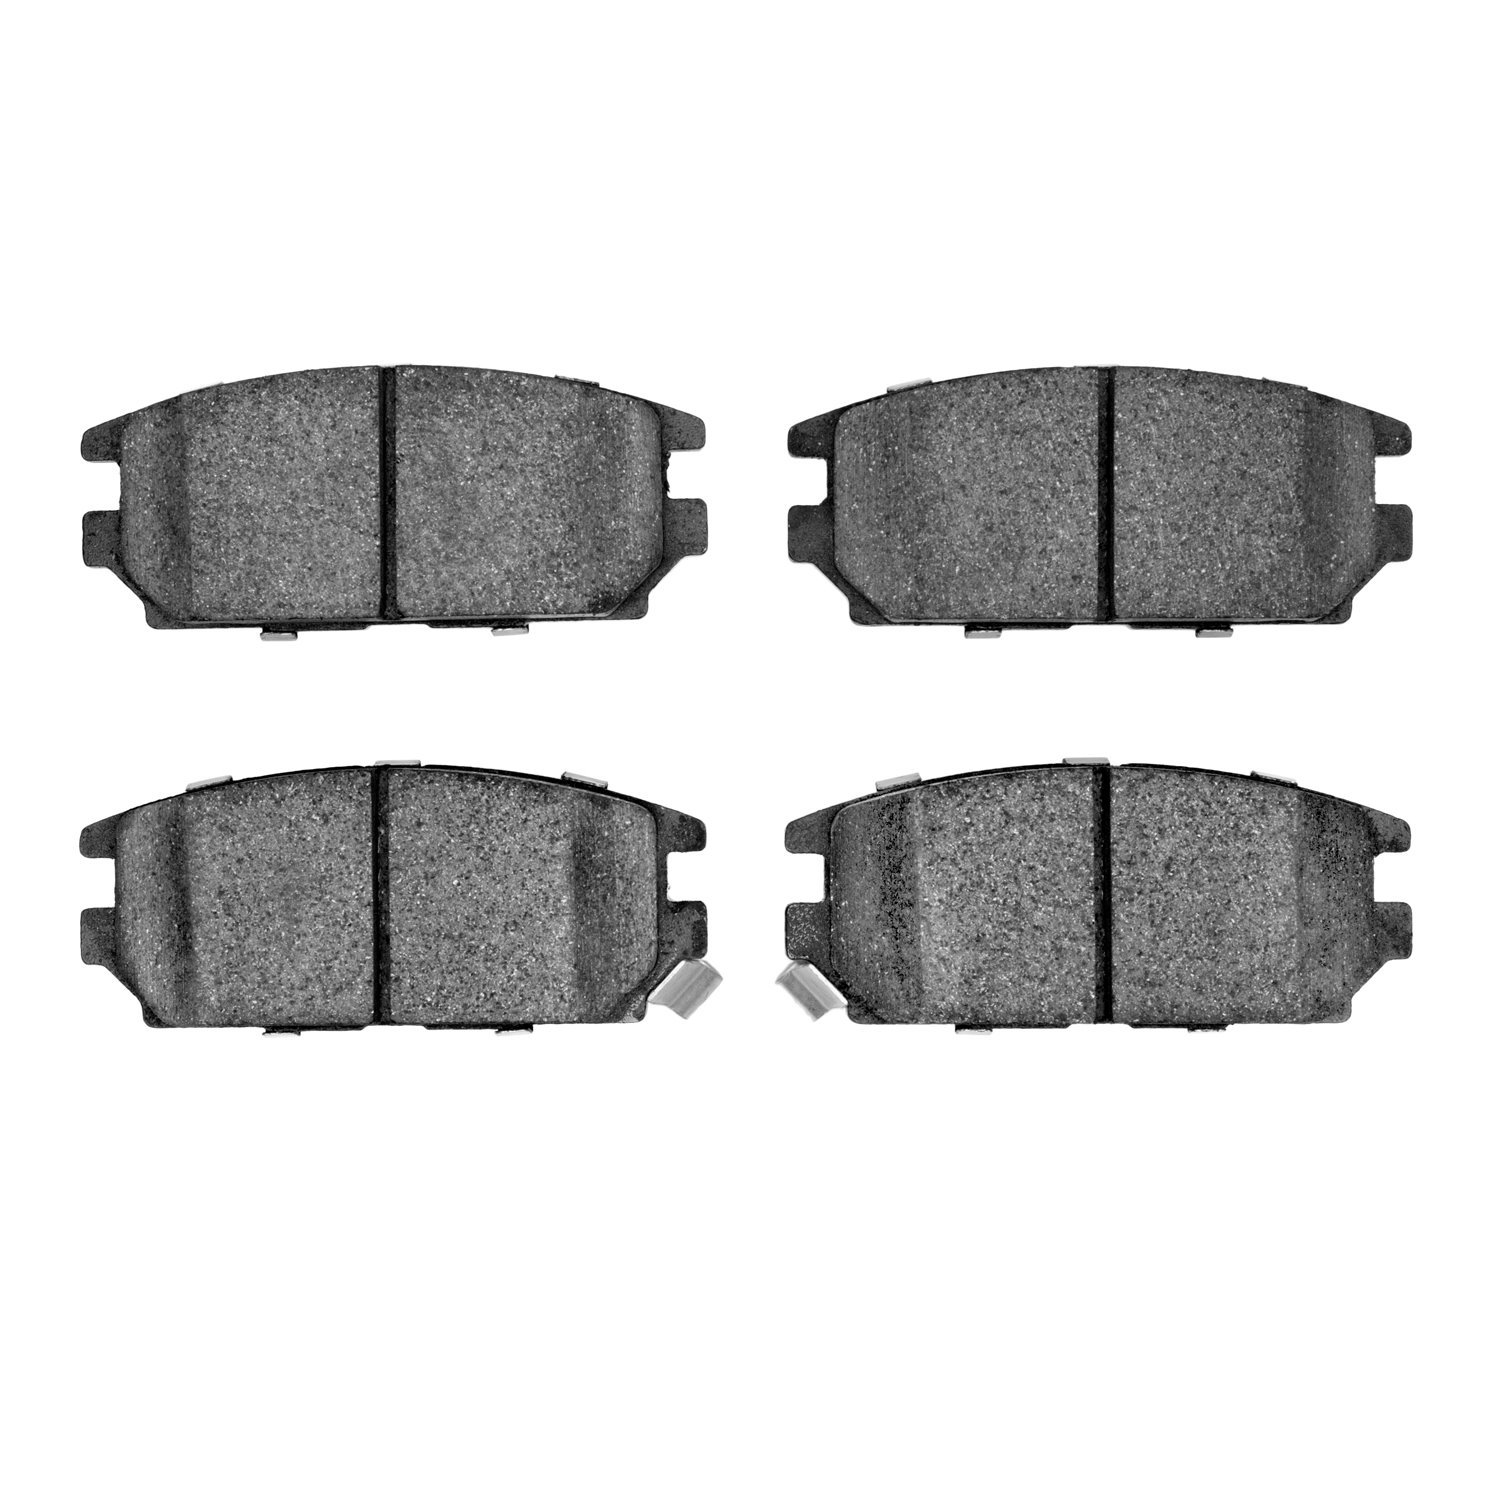 5000 Advanced Ceramic Brake Pads, 1991-2012 Multiple Makes/Models